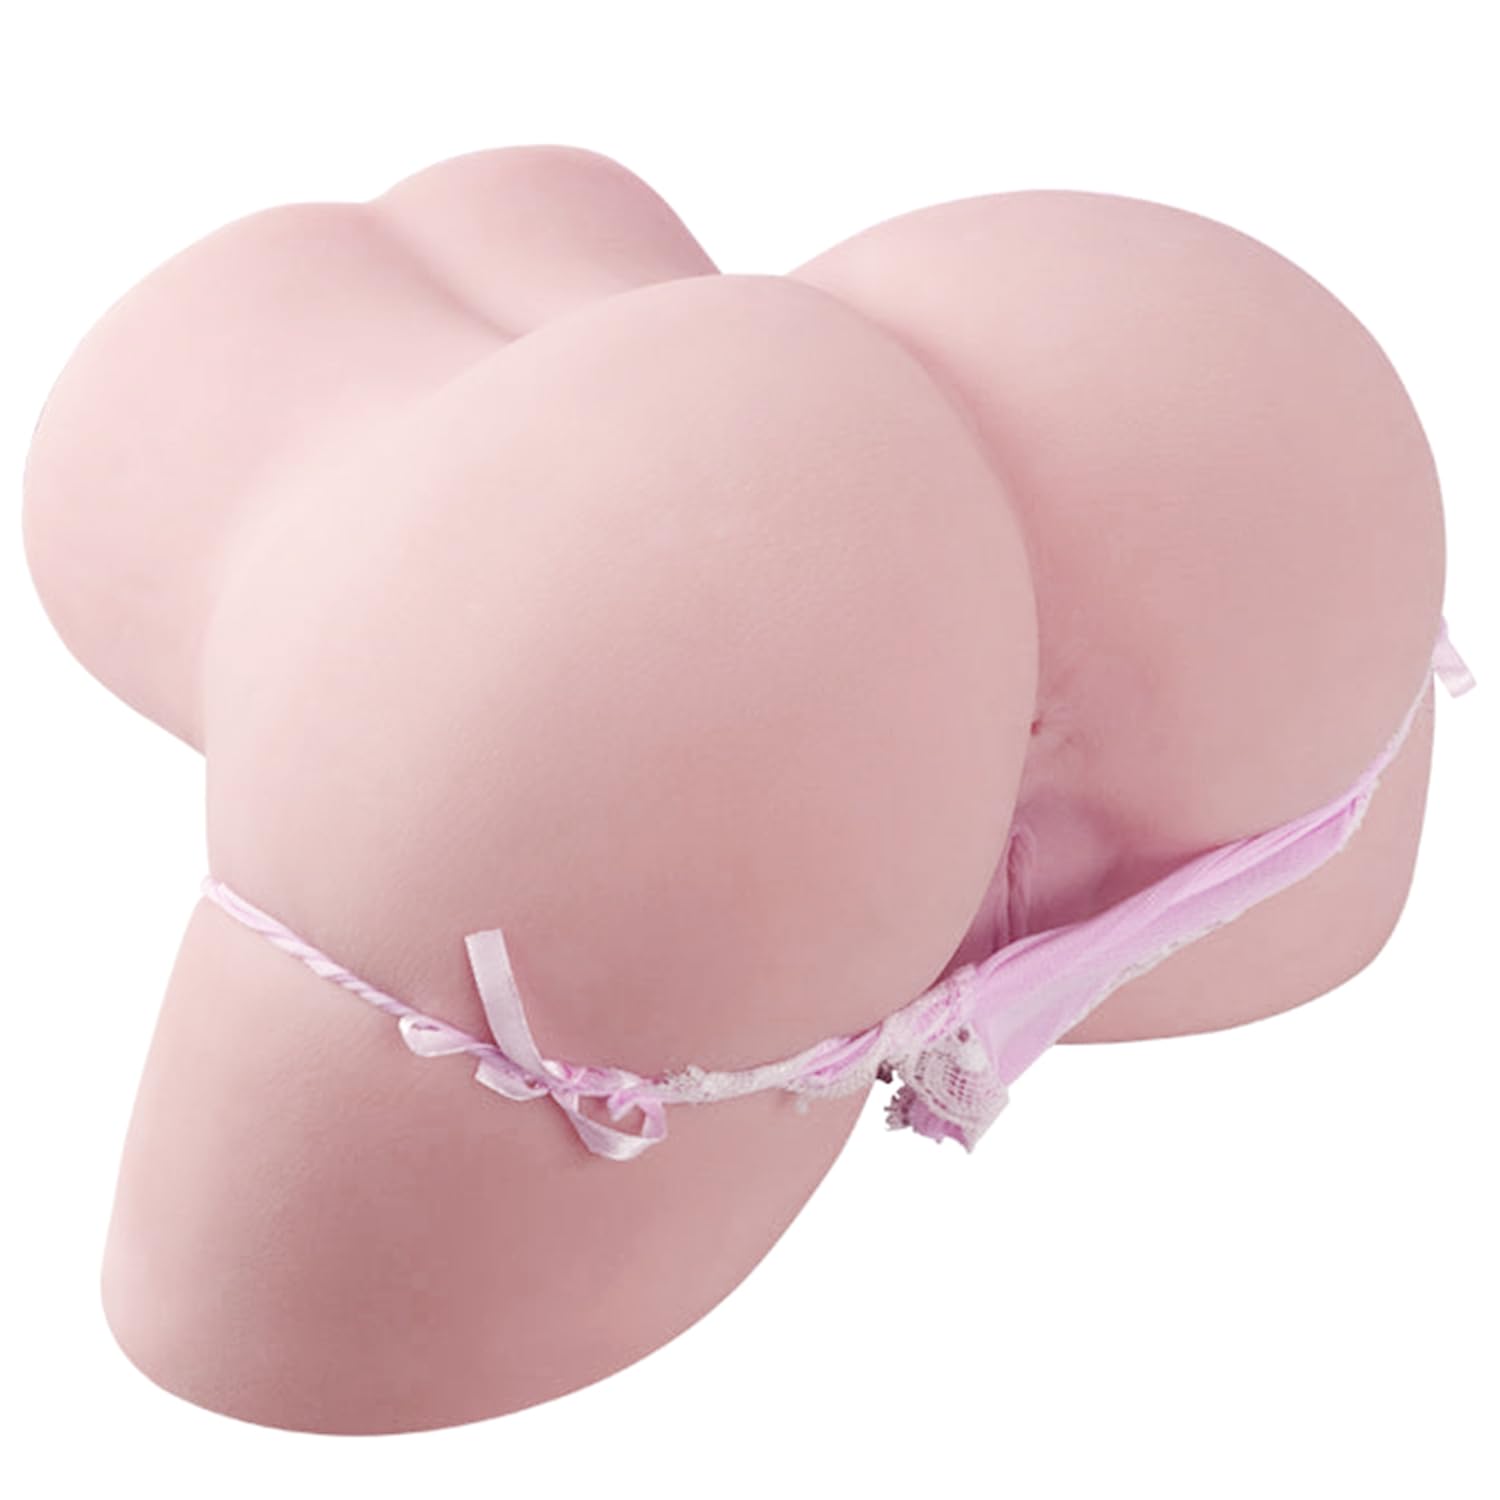 curtis maki add fake booty sex toy photo